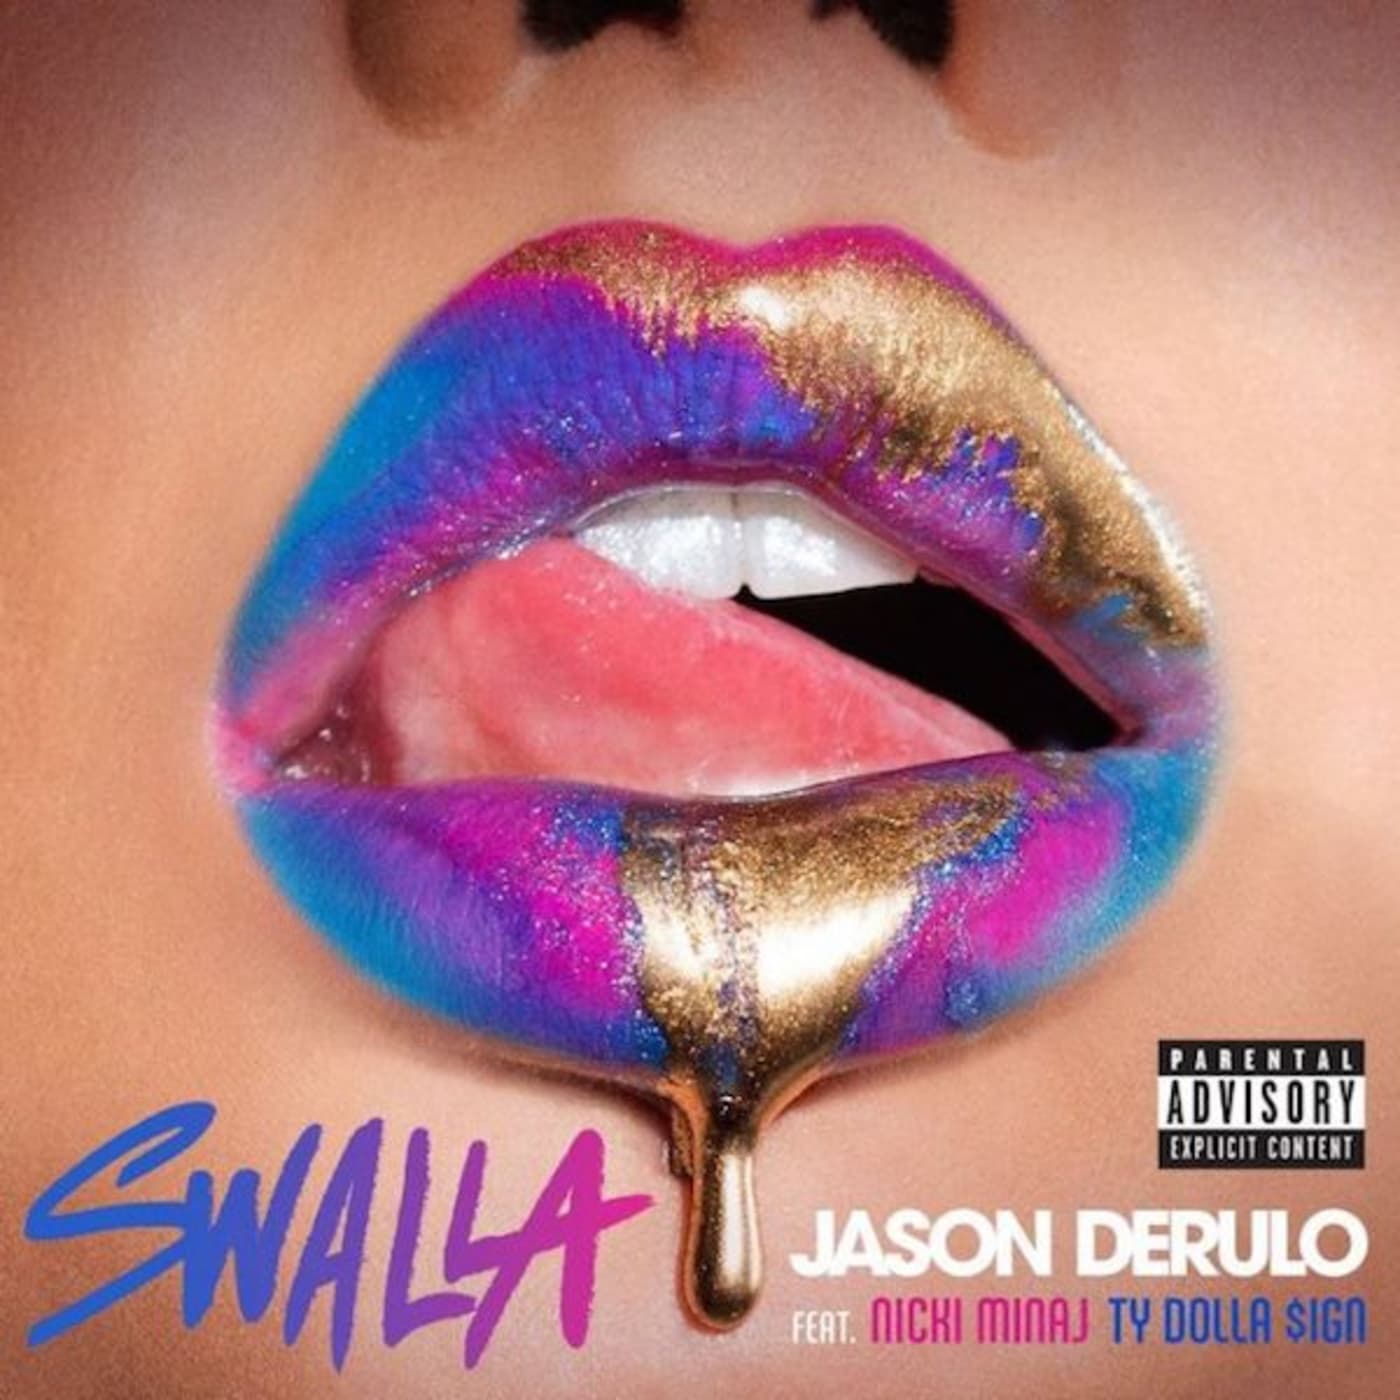 Jason Derulo "Swalla" f/ Nicki Minaj and Ty Dolla Sign